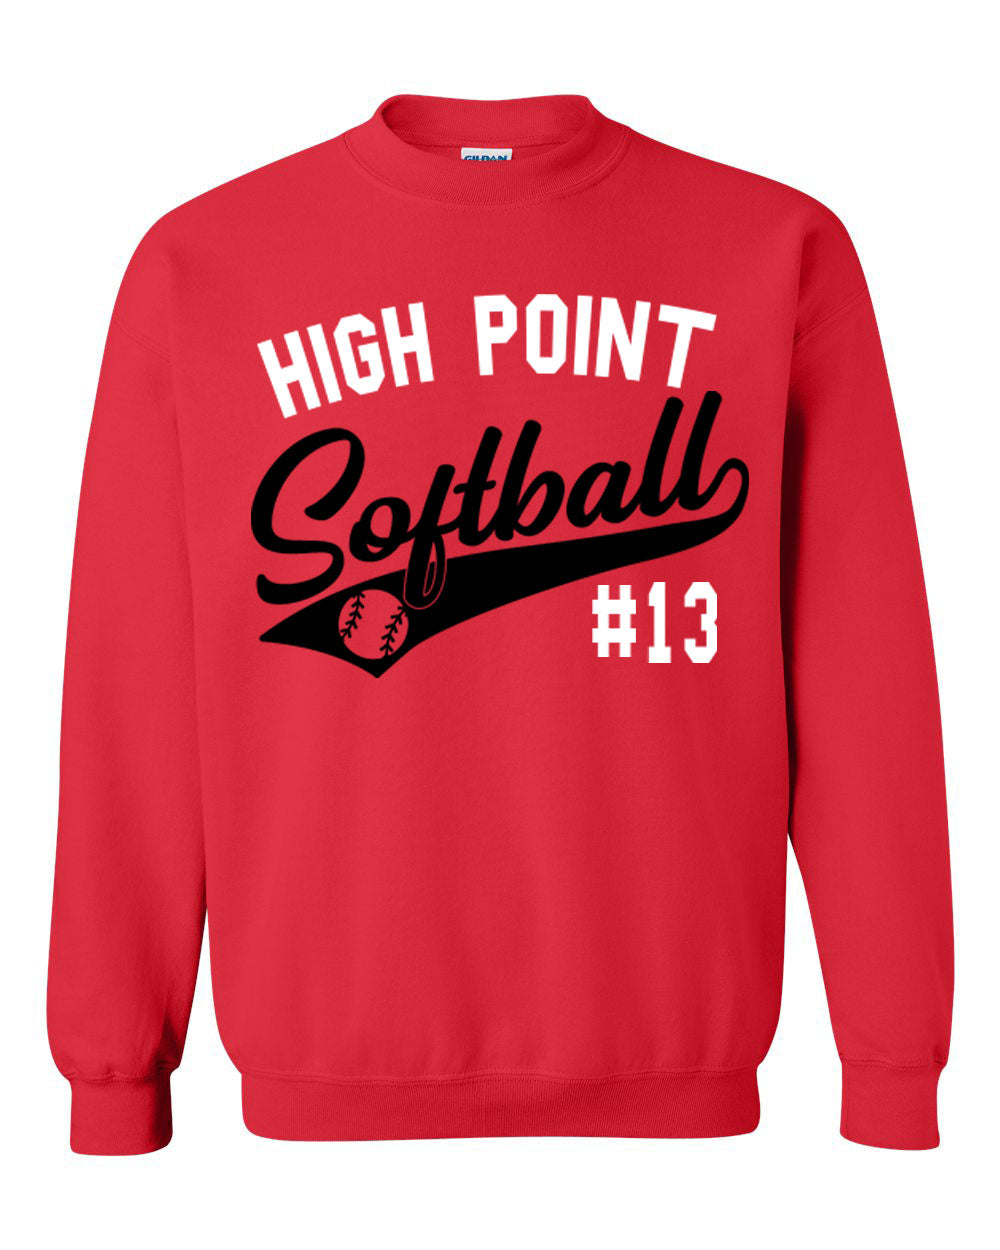 High Point Softball non hooded sweatshirt Design 2